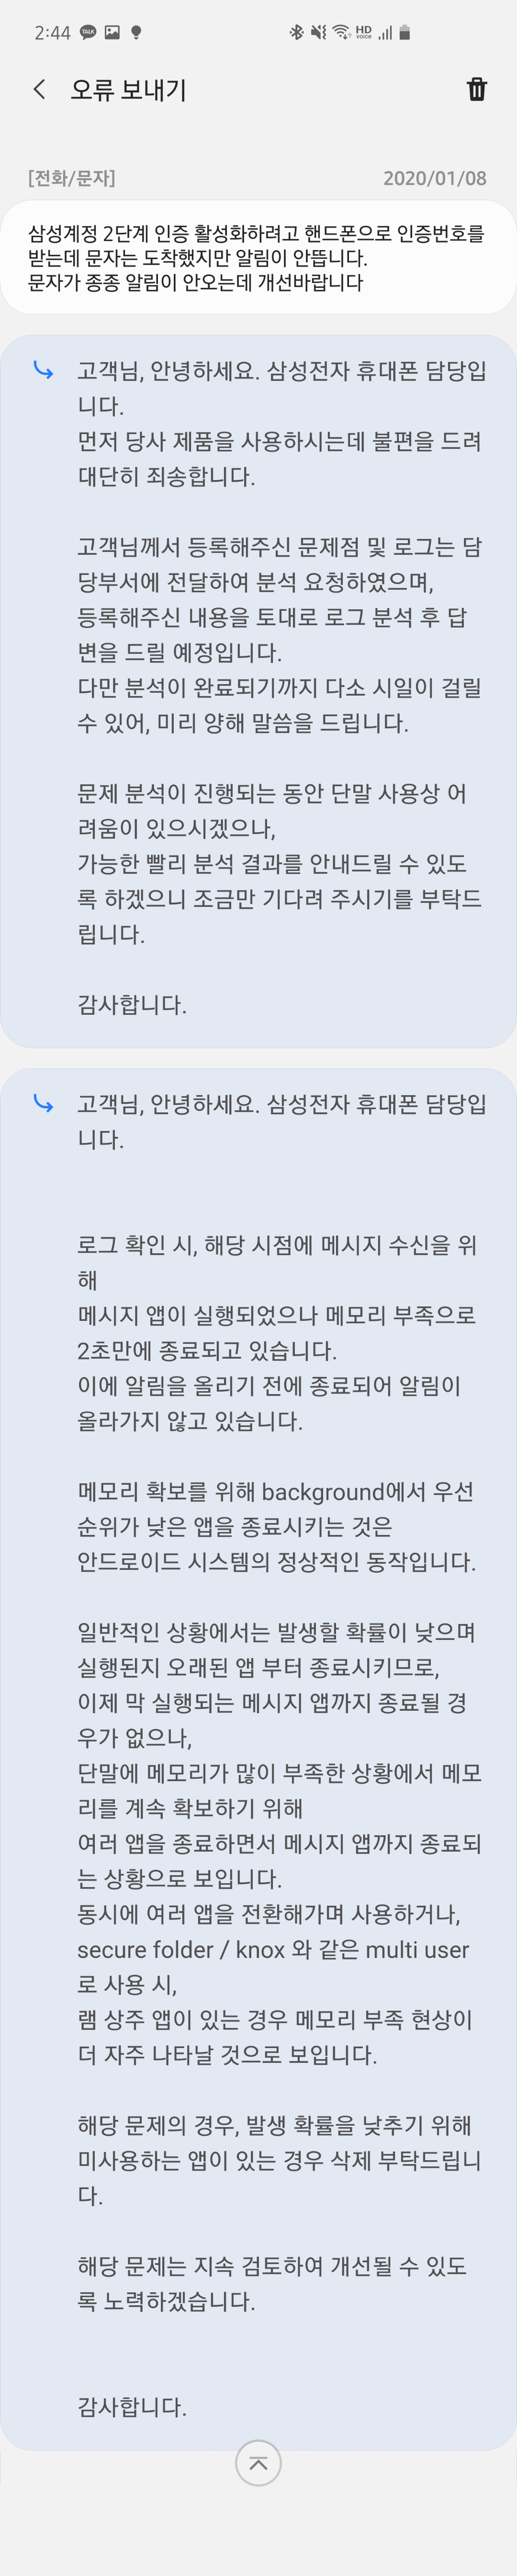 Screenshot_20200114-144435_Samsung Members.jpg